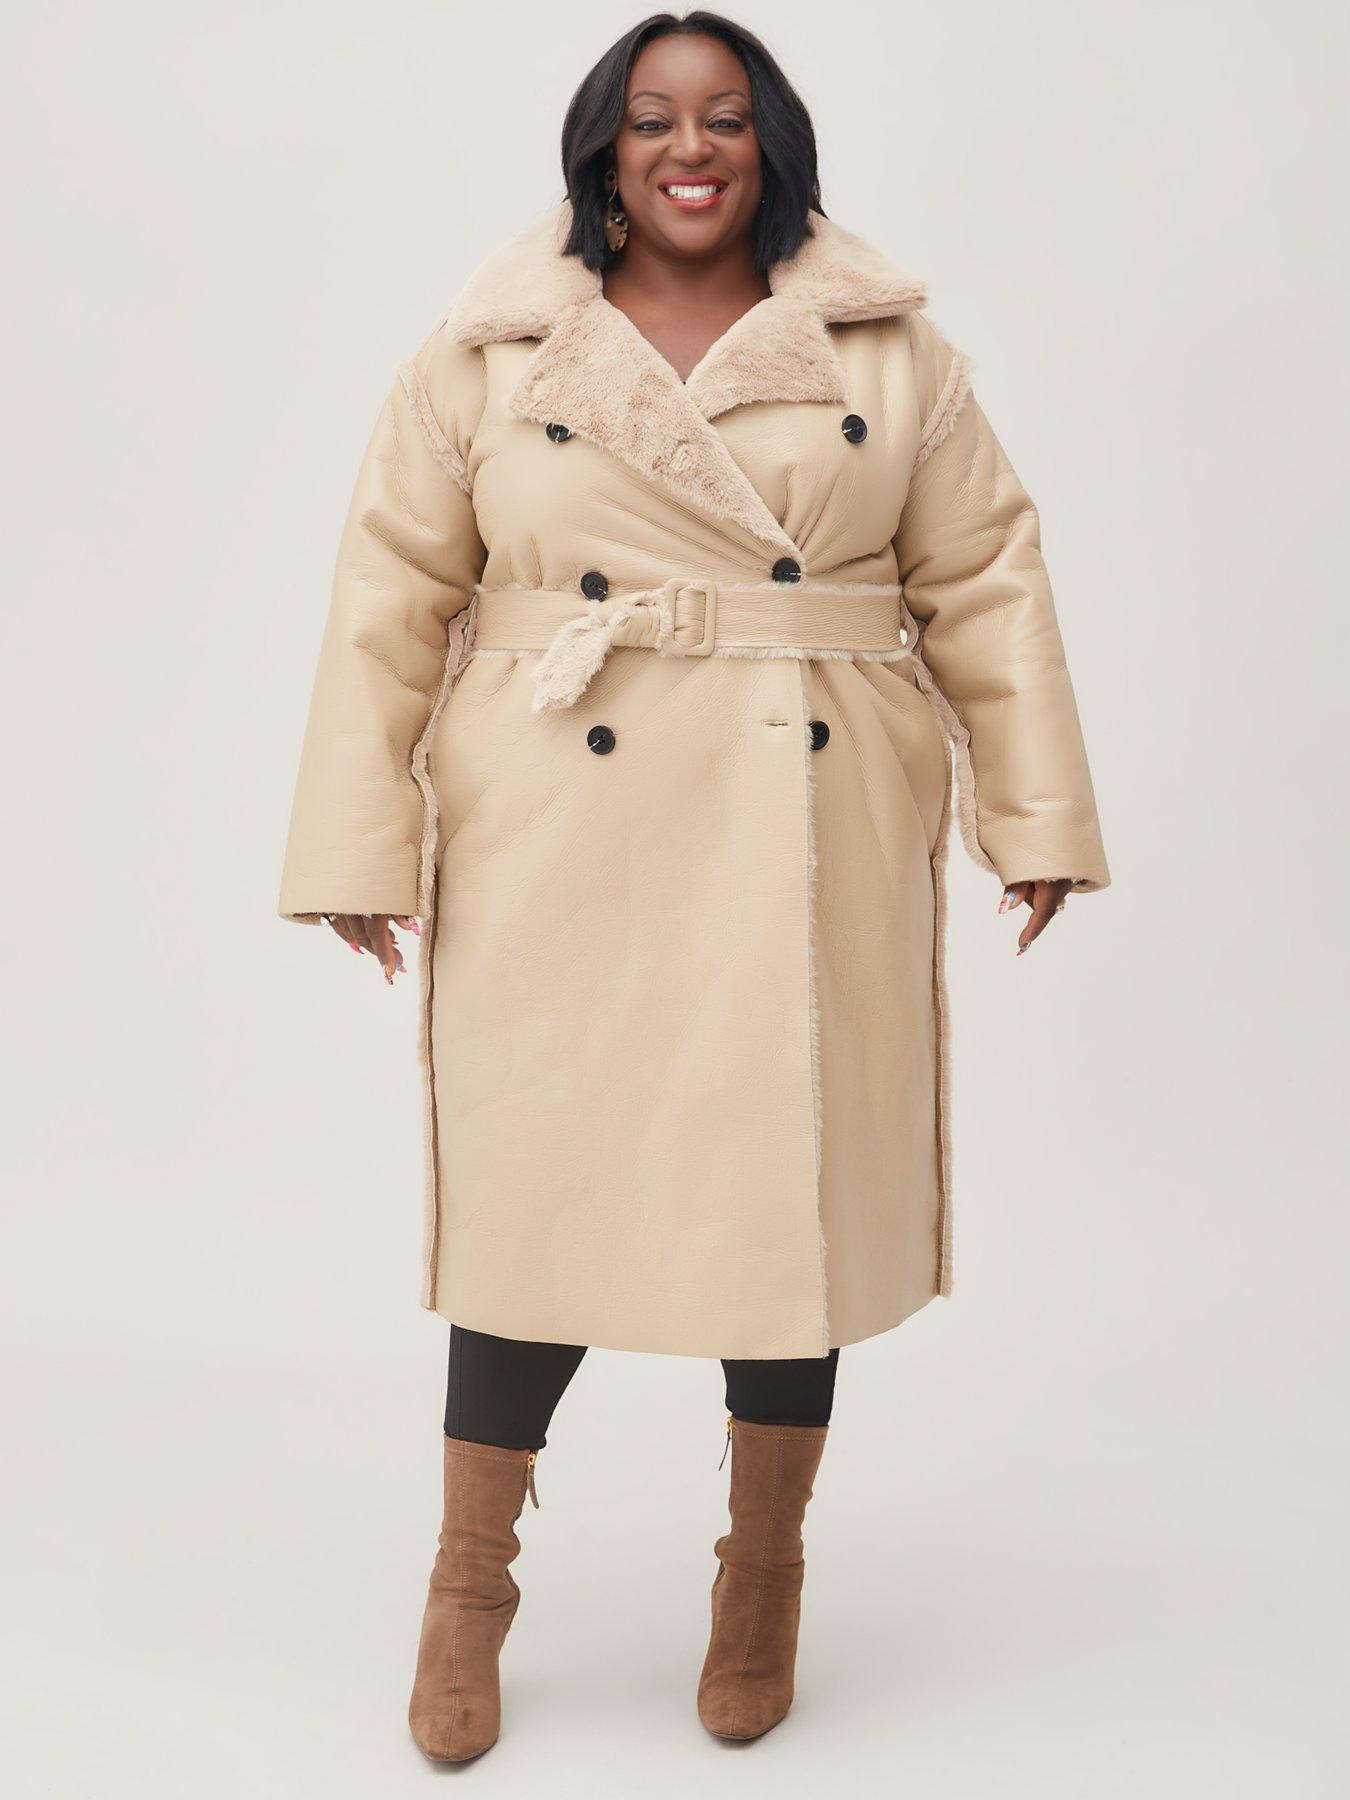 Lelili Women Double Breasted Parka Coat Plus Size Elegant Long Sleeve Lapel Long Outwear Jacket for Work Business 